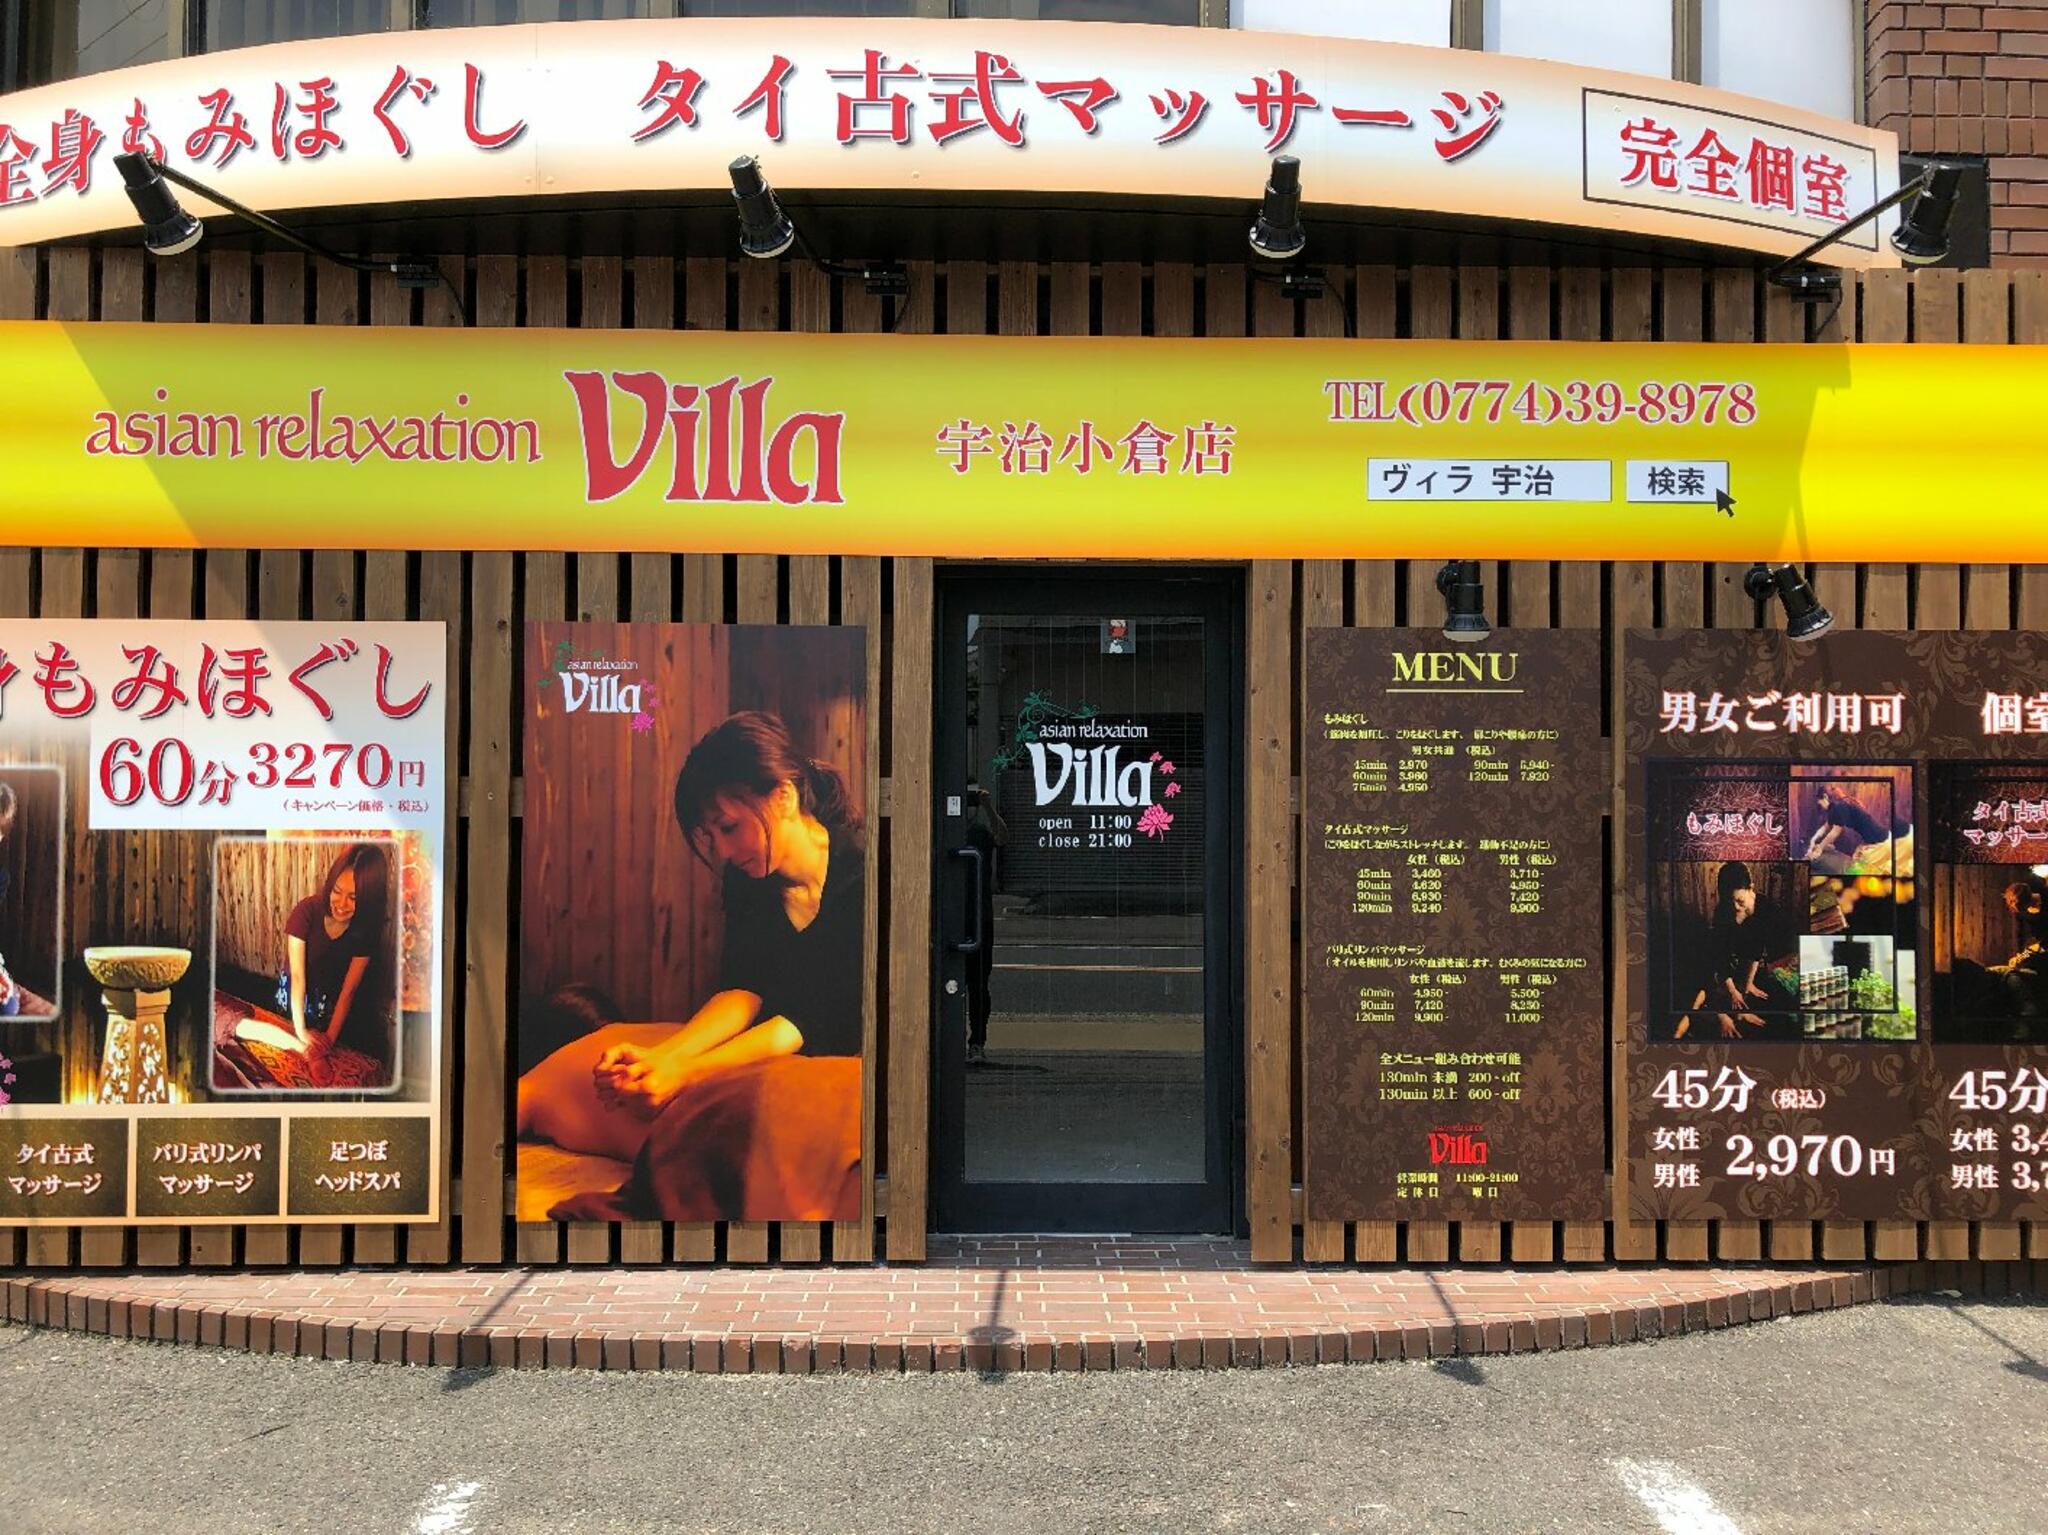 asian relaxation villa 宇治小倉店の代表写真9